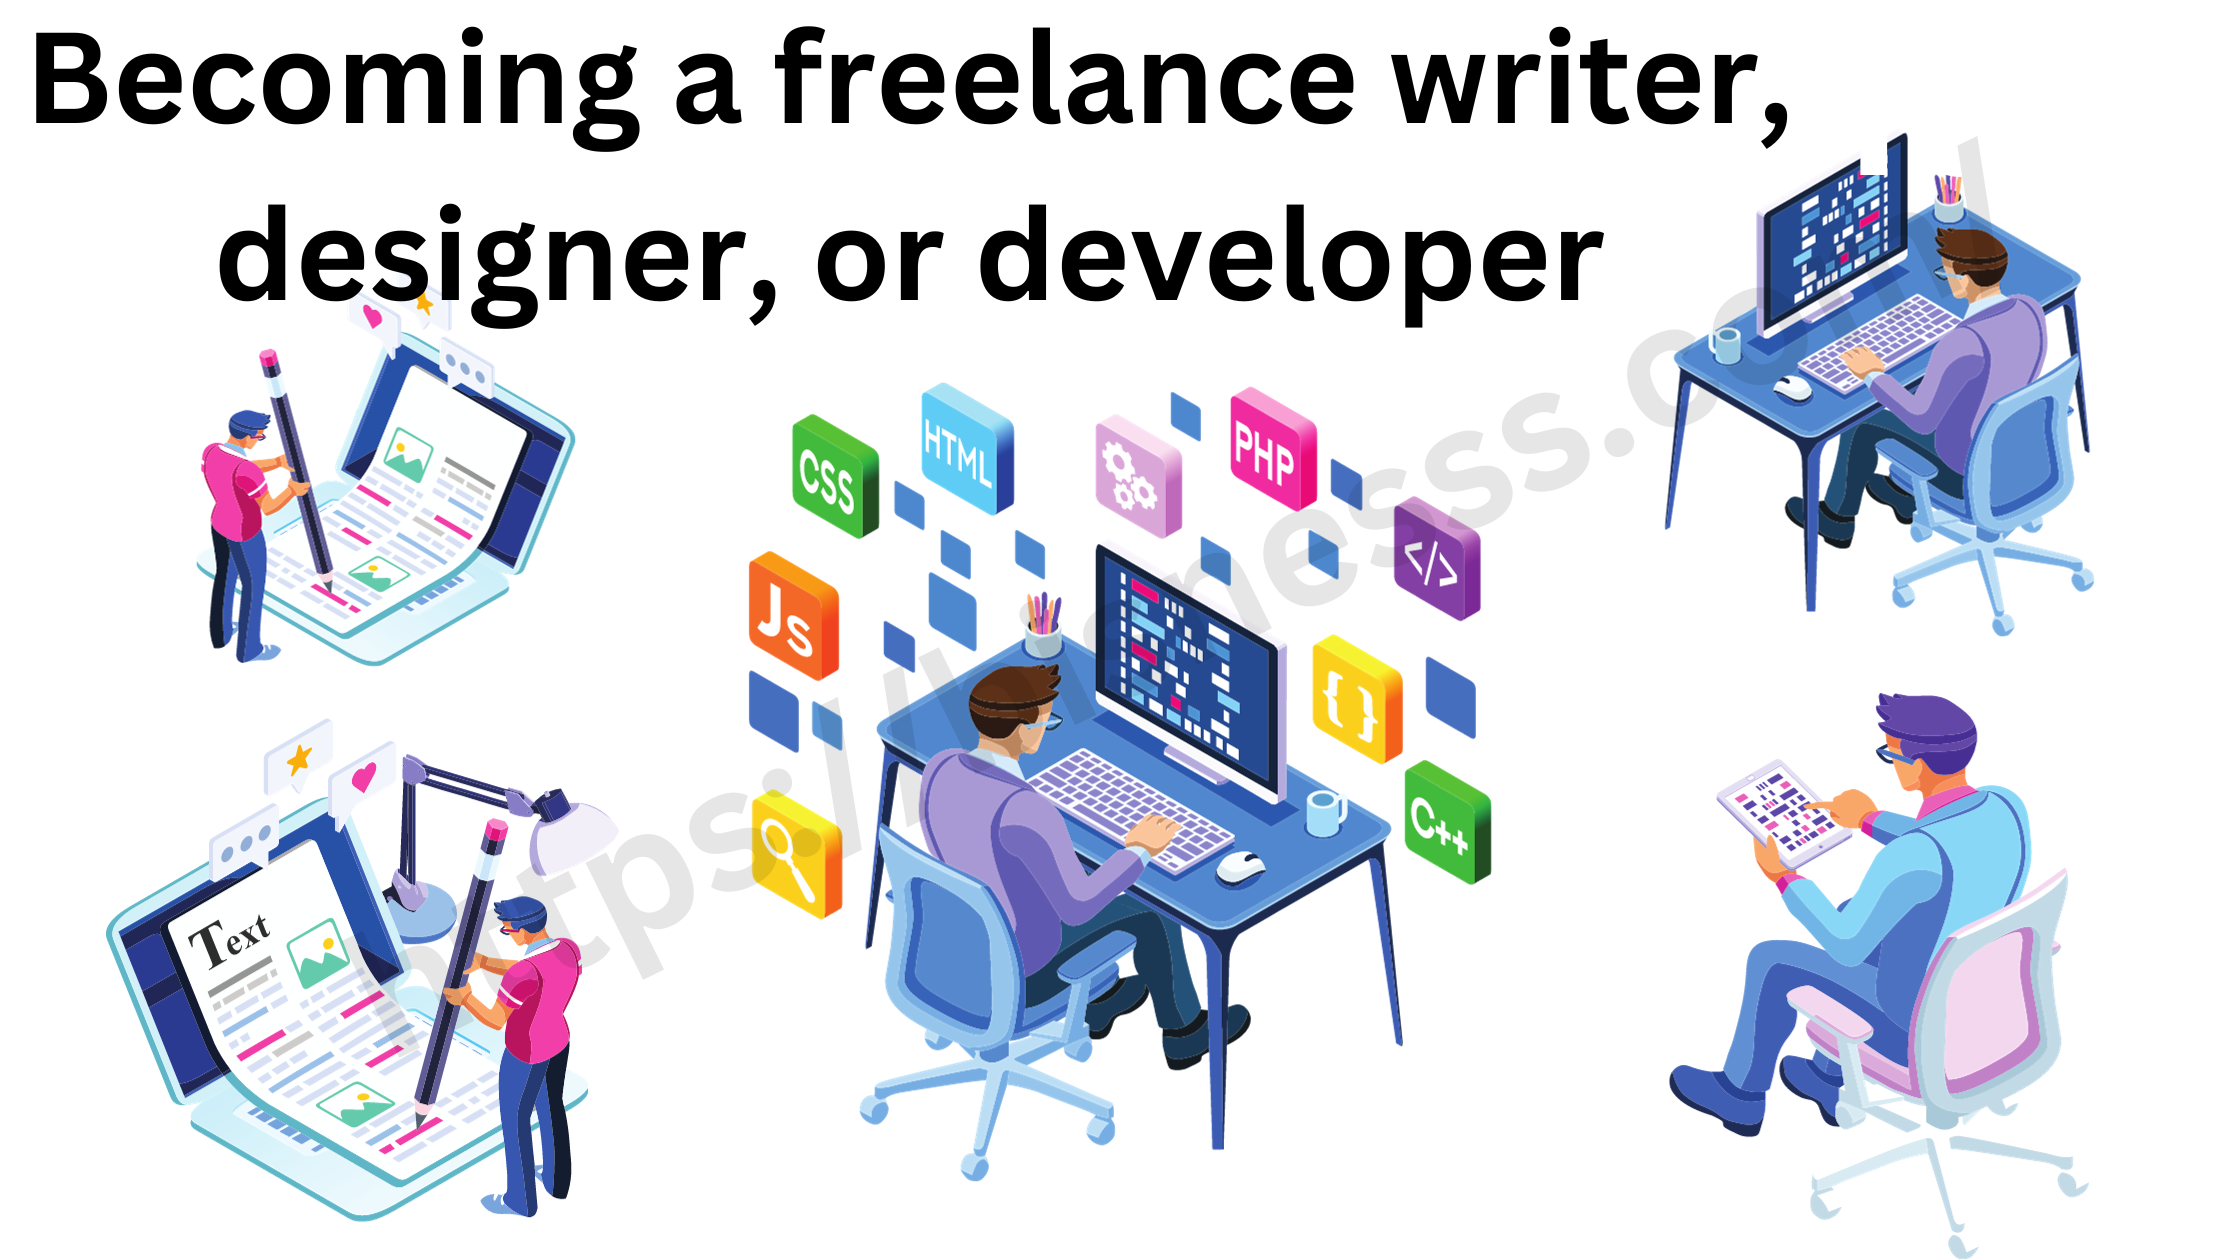 Becoming a freelance writer, designer, or developer